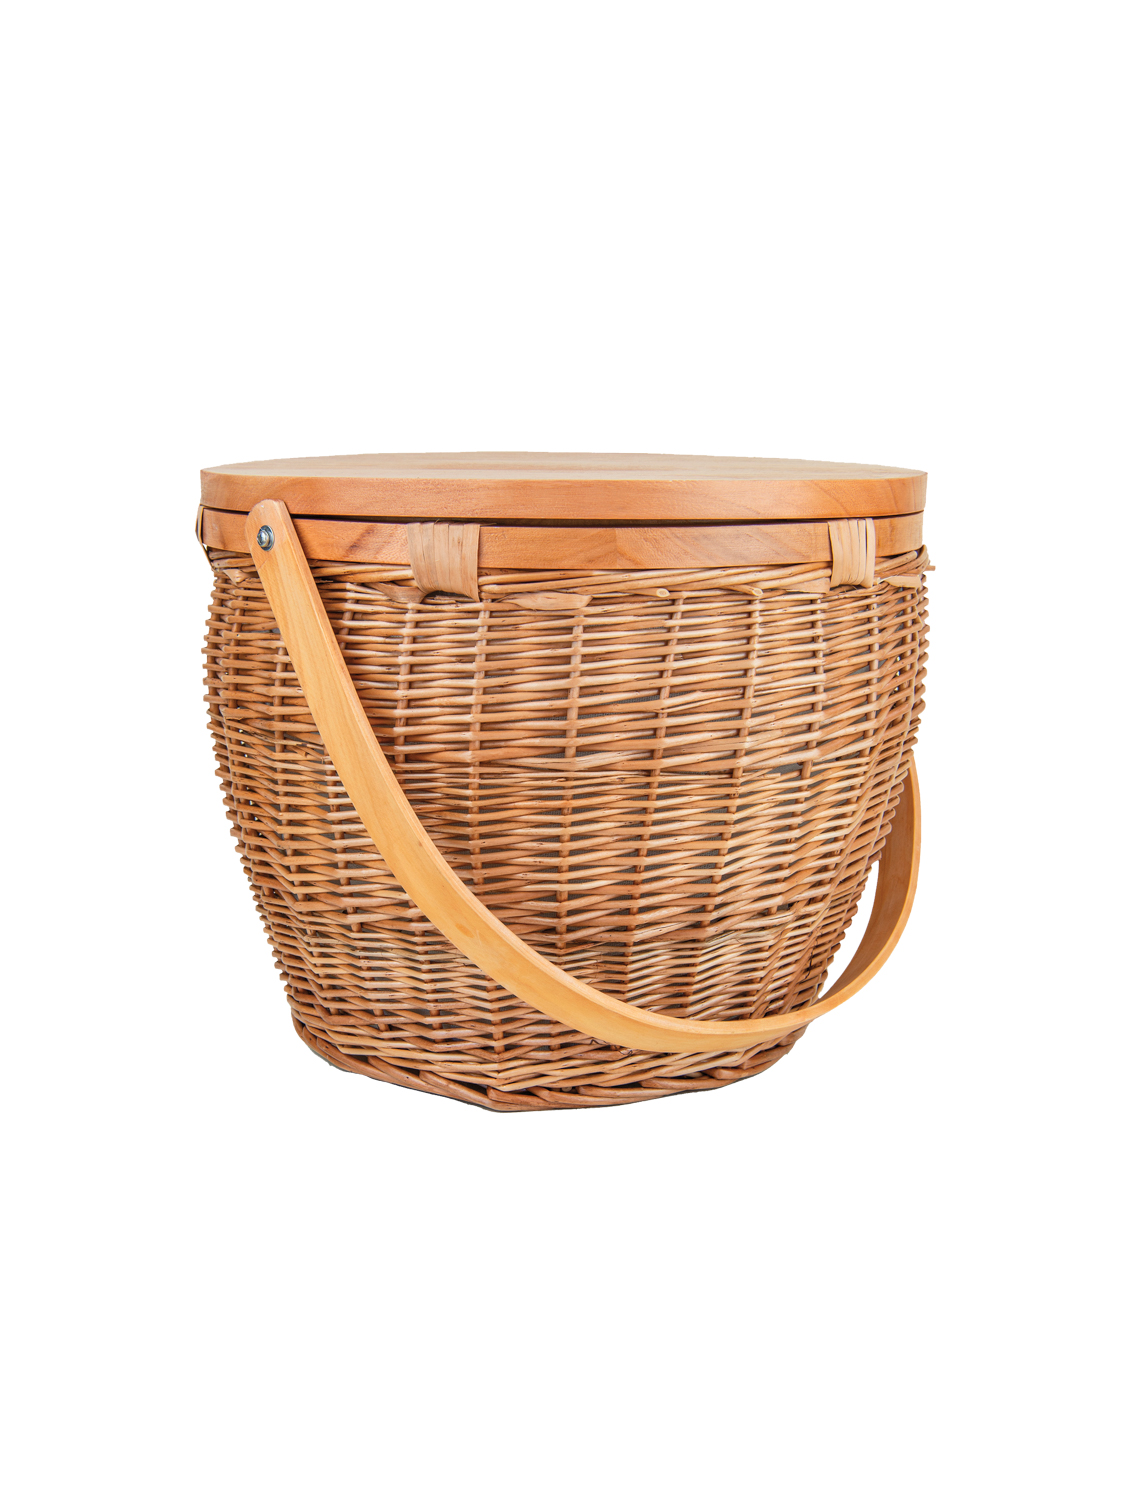 large brown wicker picnic basket